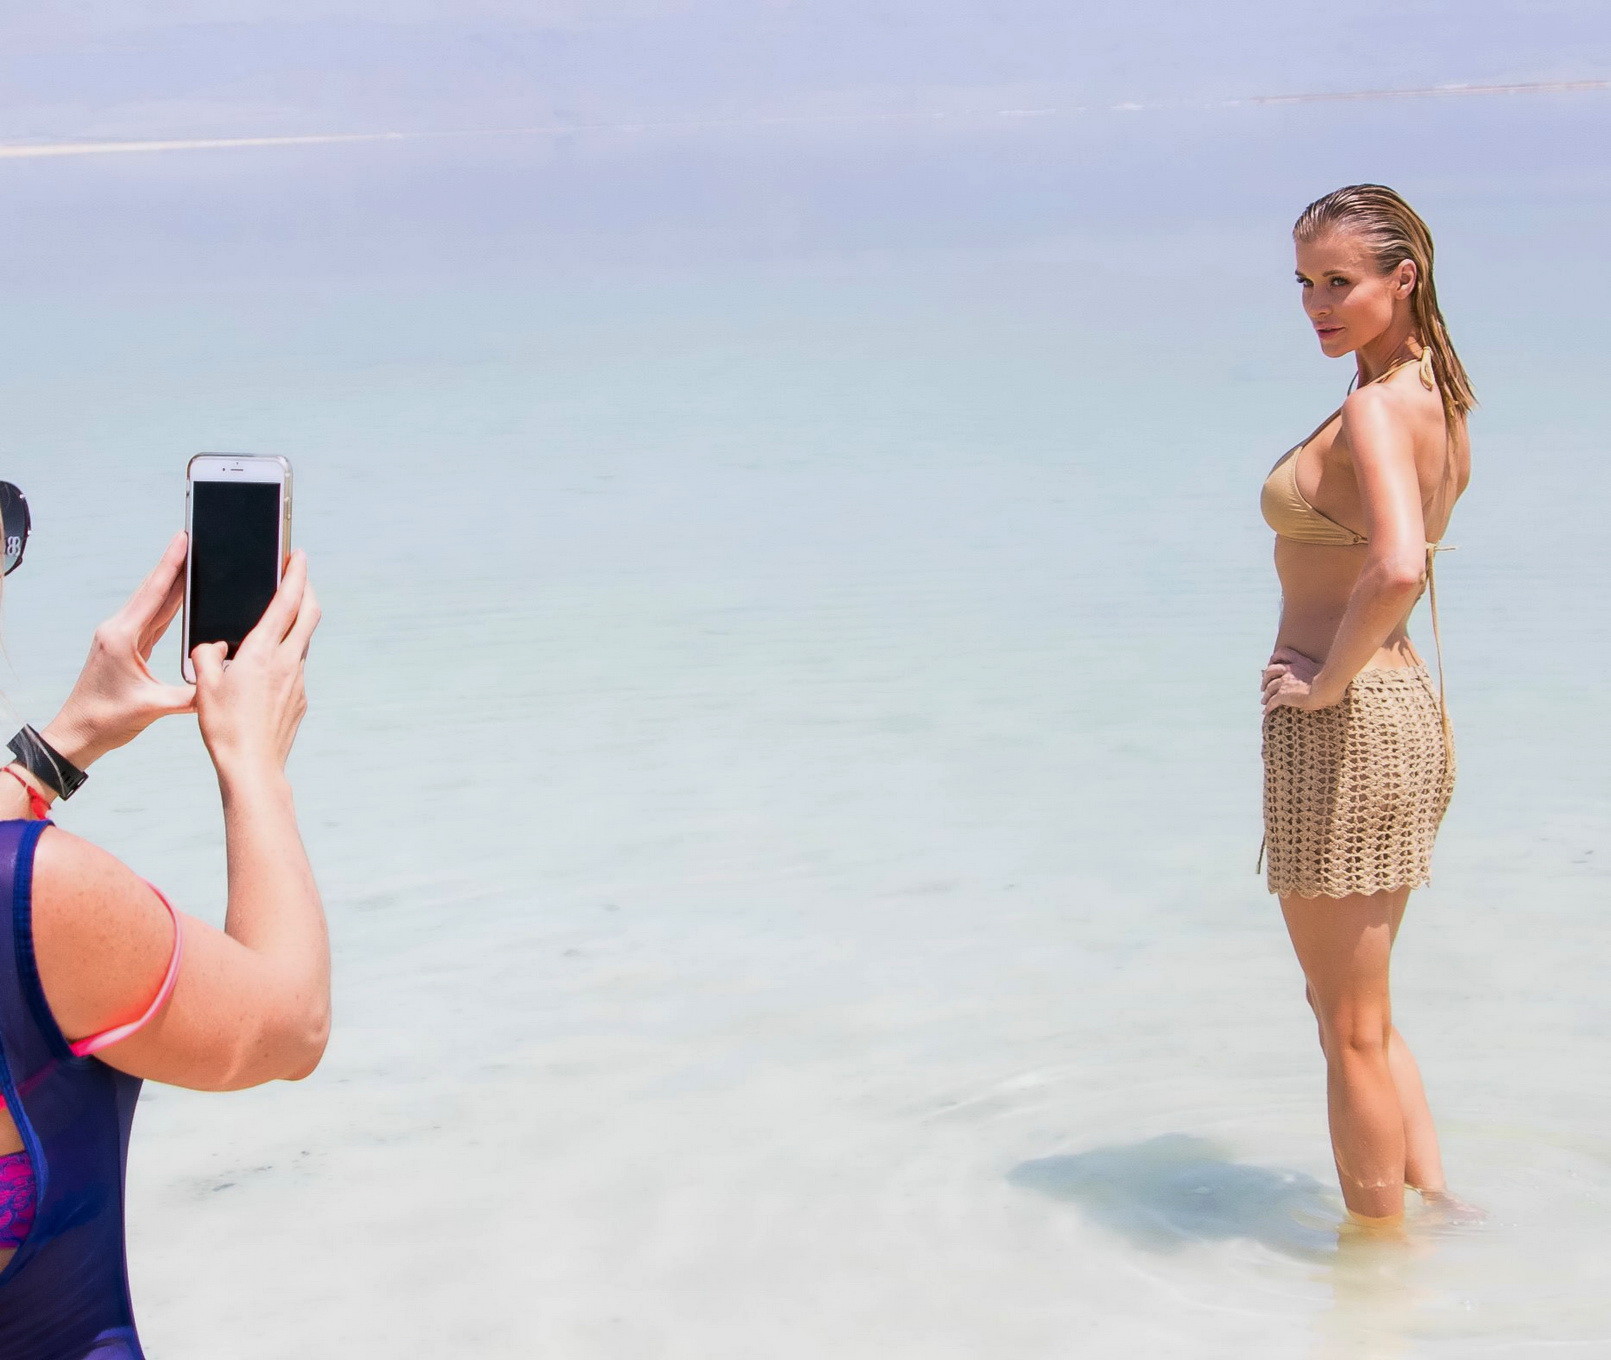 Joanna krupa montre ses pokies et son cameltoe en bikini
 #75154322